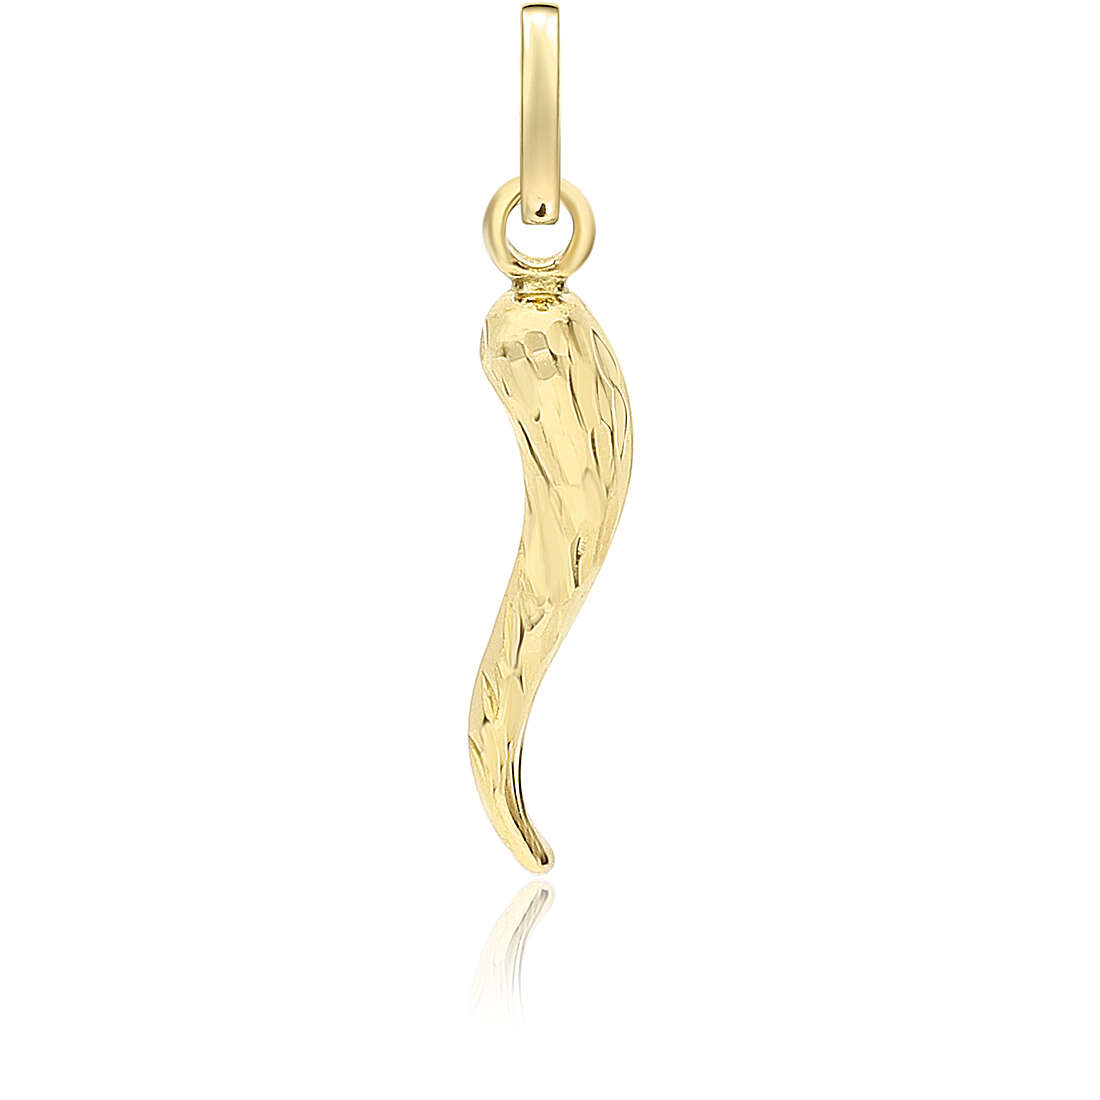 charm unisex jewellery GioiaPura Oro 750 GP-S214401